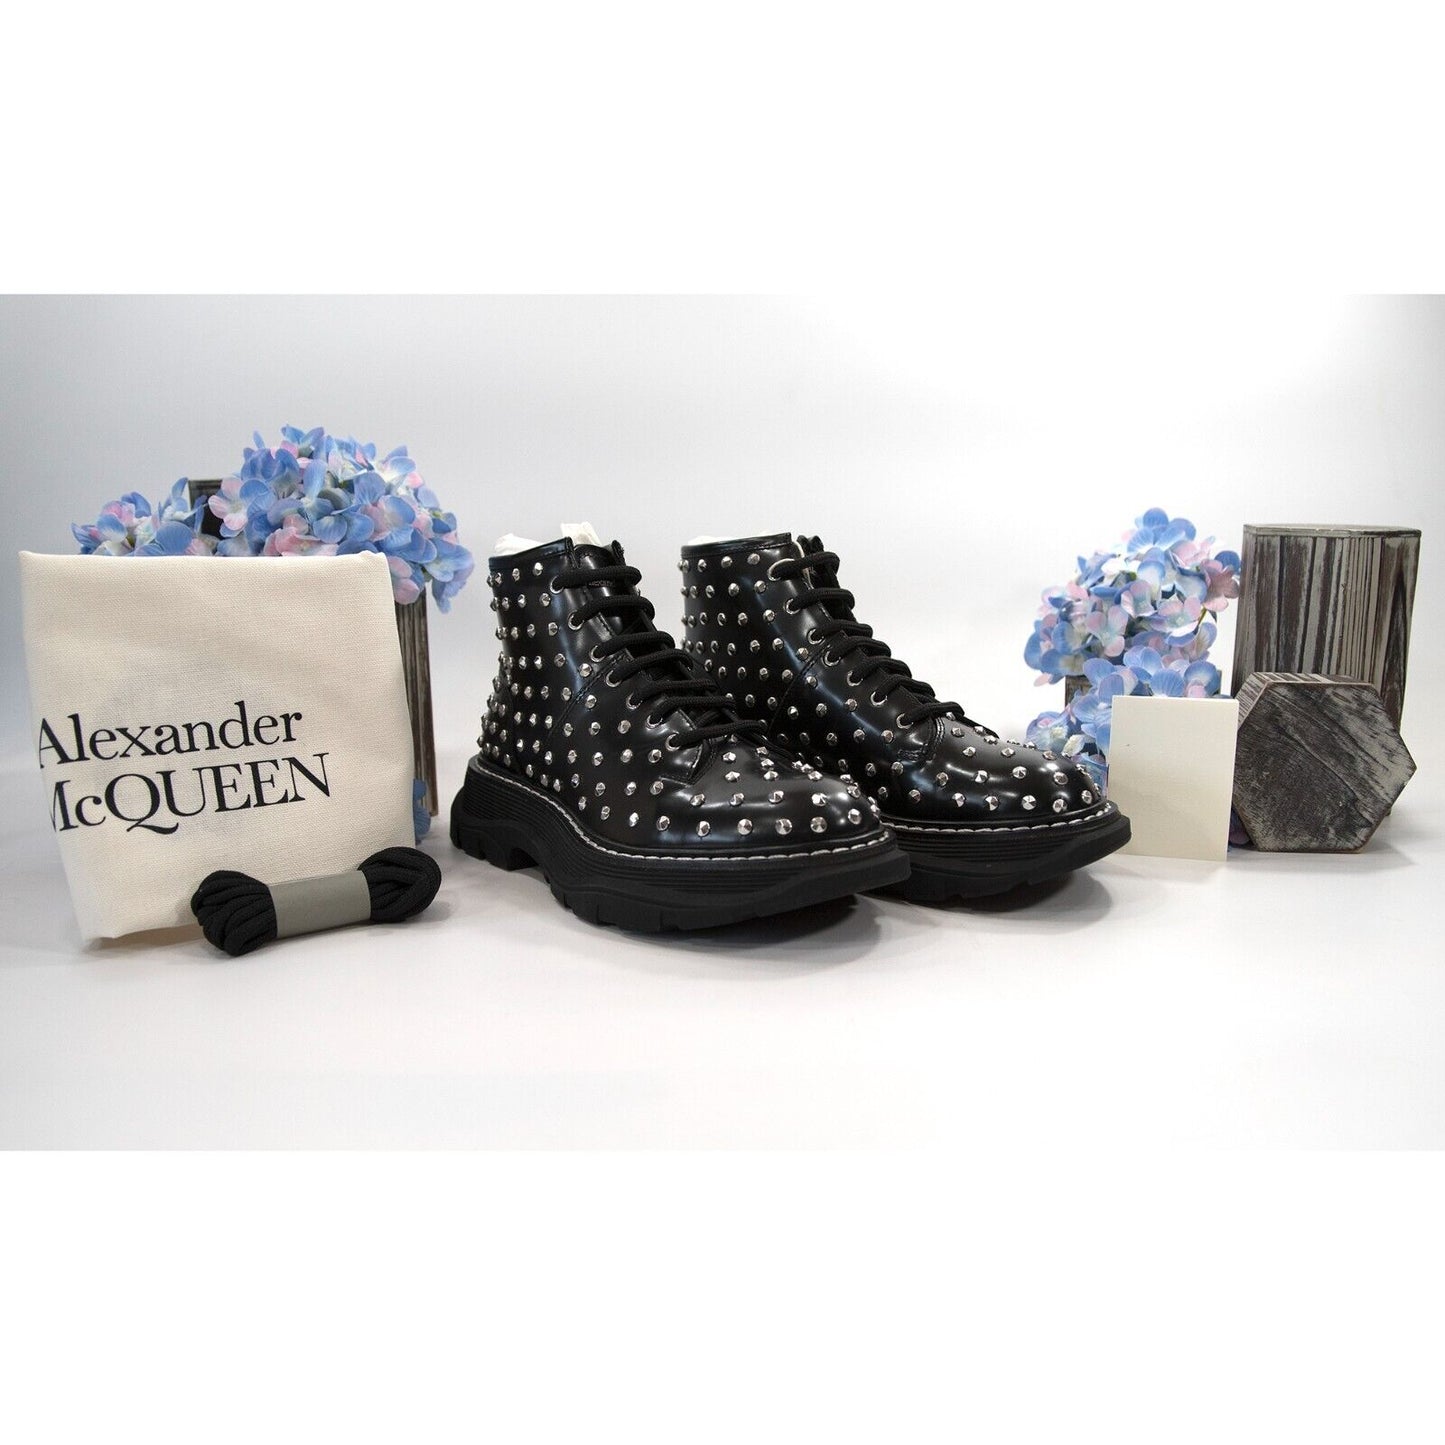 Alexander McQueen Tread Slick Studded Black Leather Lug Sole Boots 37 NIB